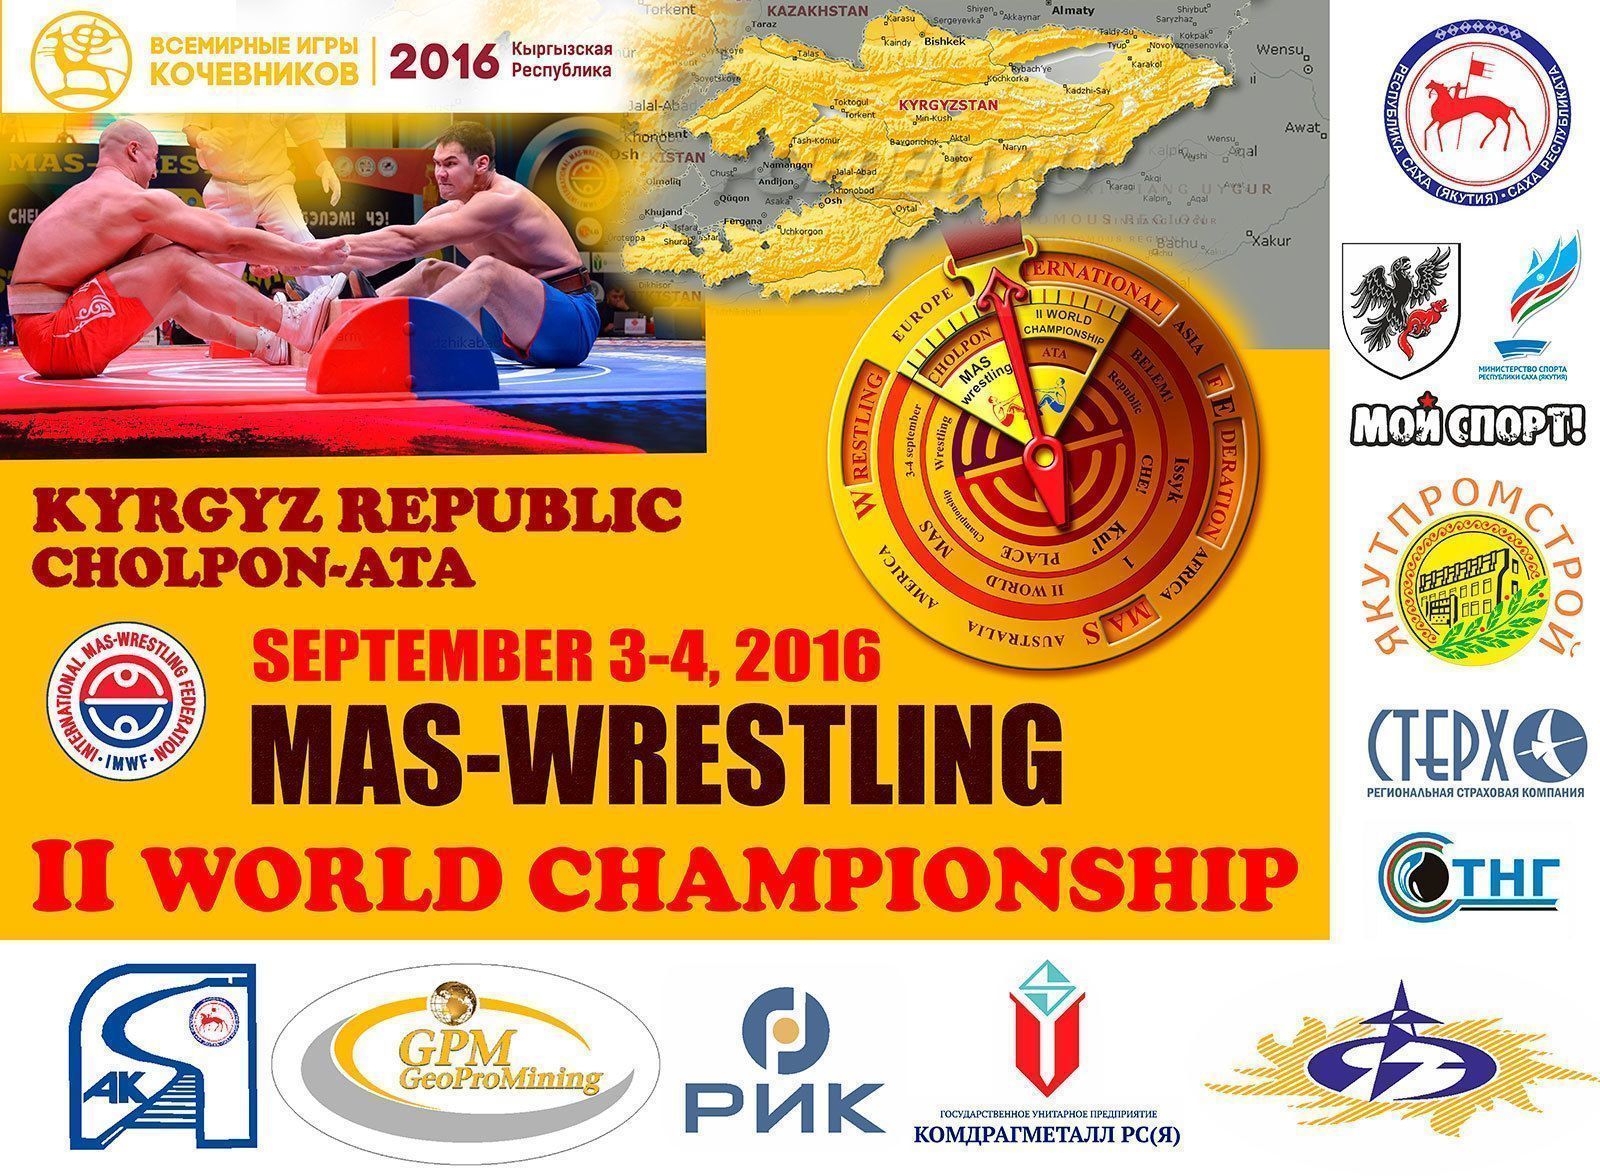 II Mas-Wrestling World Championship